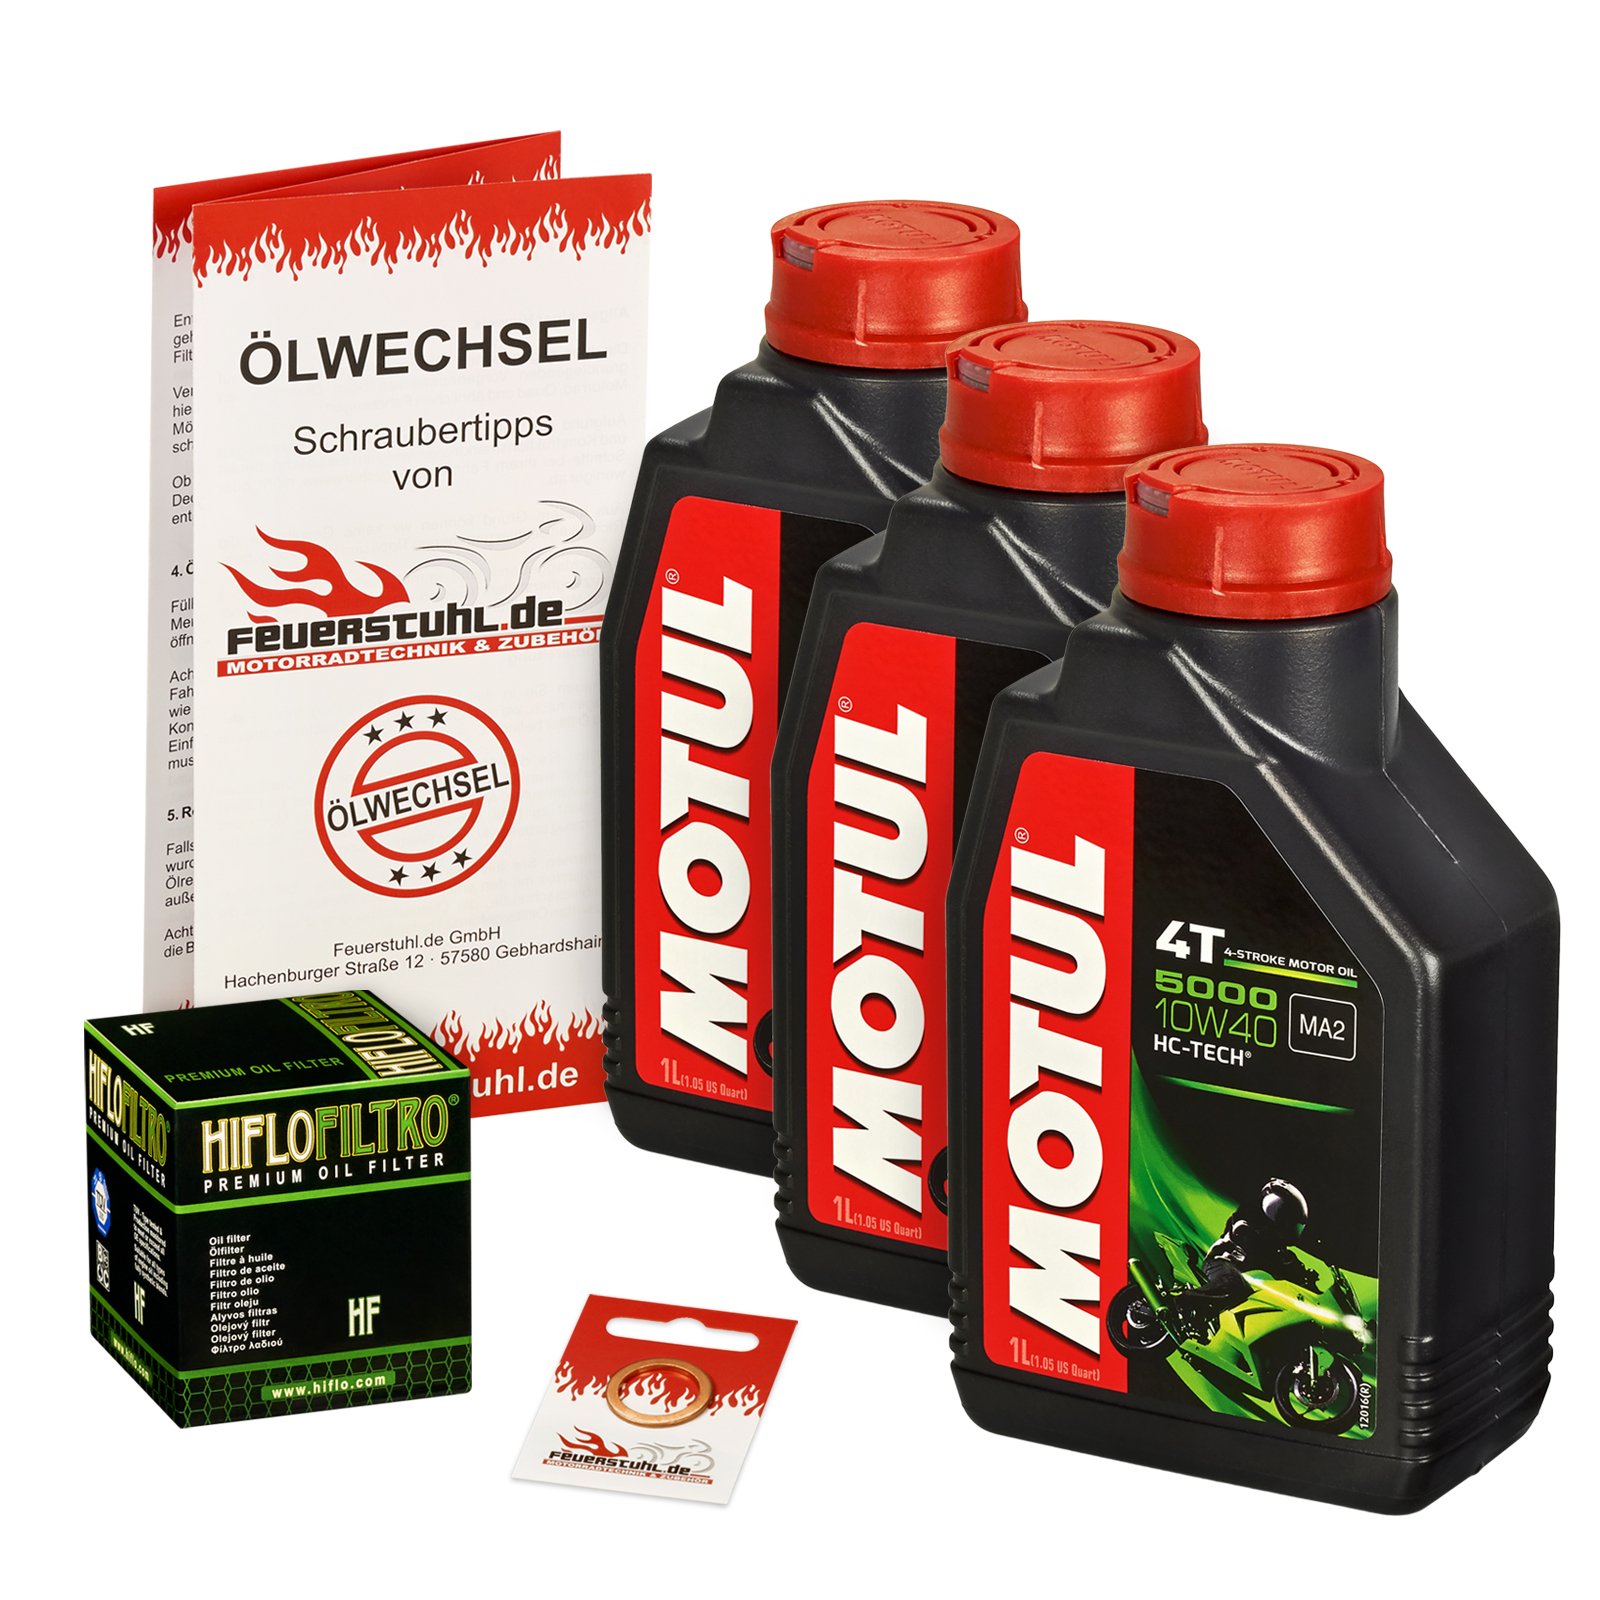 Motul 10W-40 Öl + HiFlo Ölfilter für Honda NTV 650 Revere, 88-97, RC33 - Ölwechselset inkl. Motoröl, Filter, Dichtring von Feuerstuhl.de GmbH